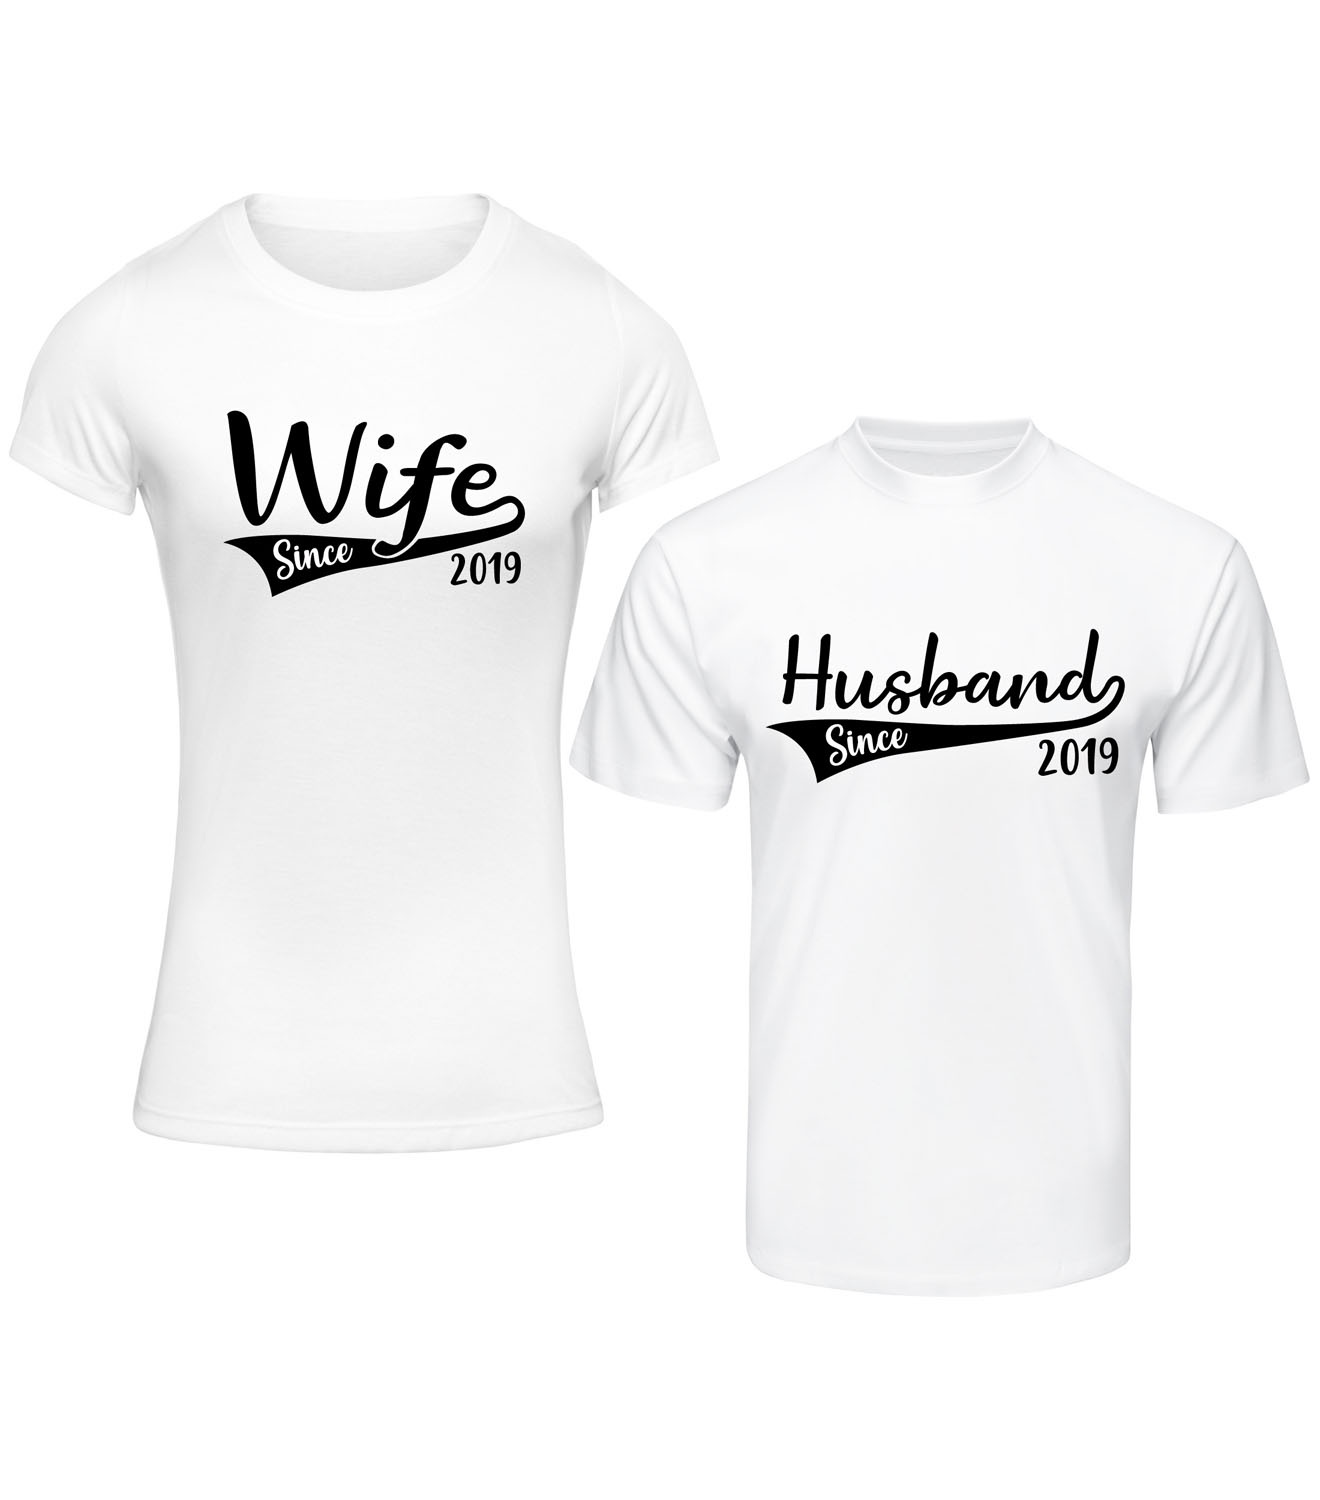 Just Married Matching Couple Shirts UK,Wedding TShirt,Gift for Wife,Husband Gift